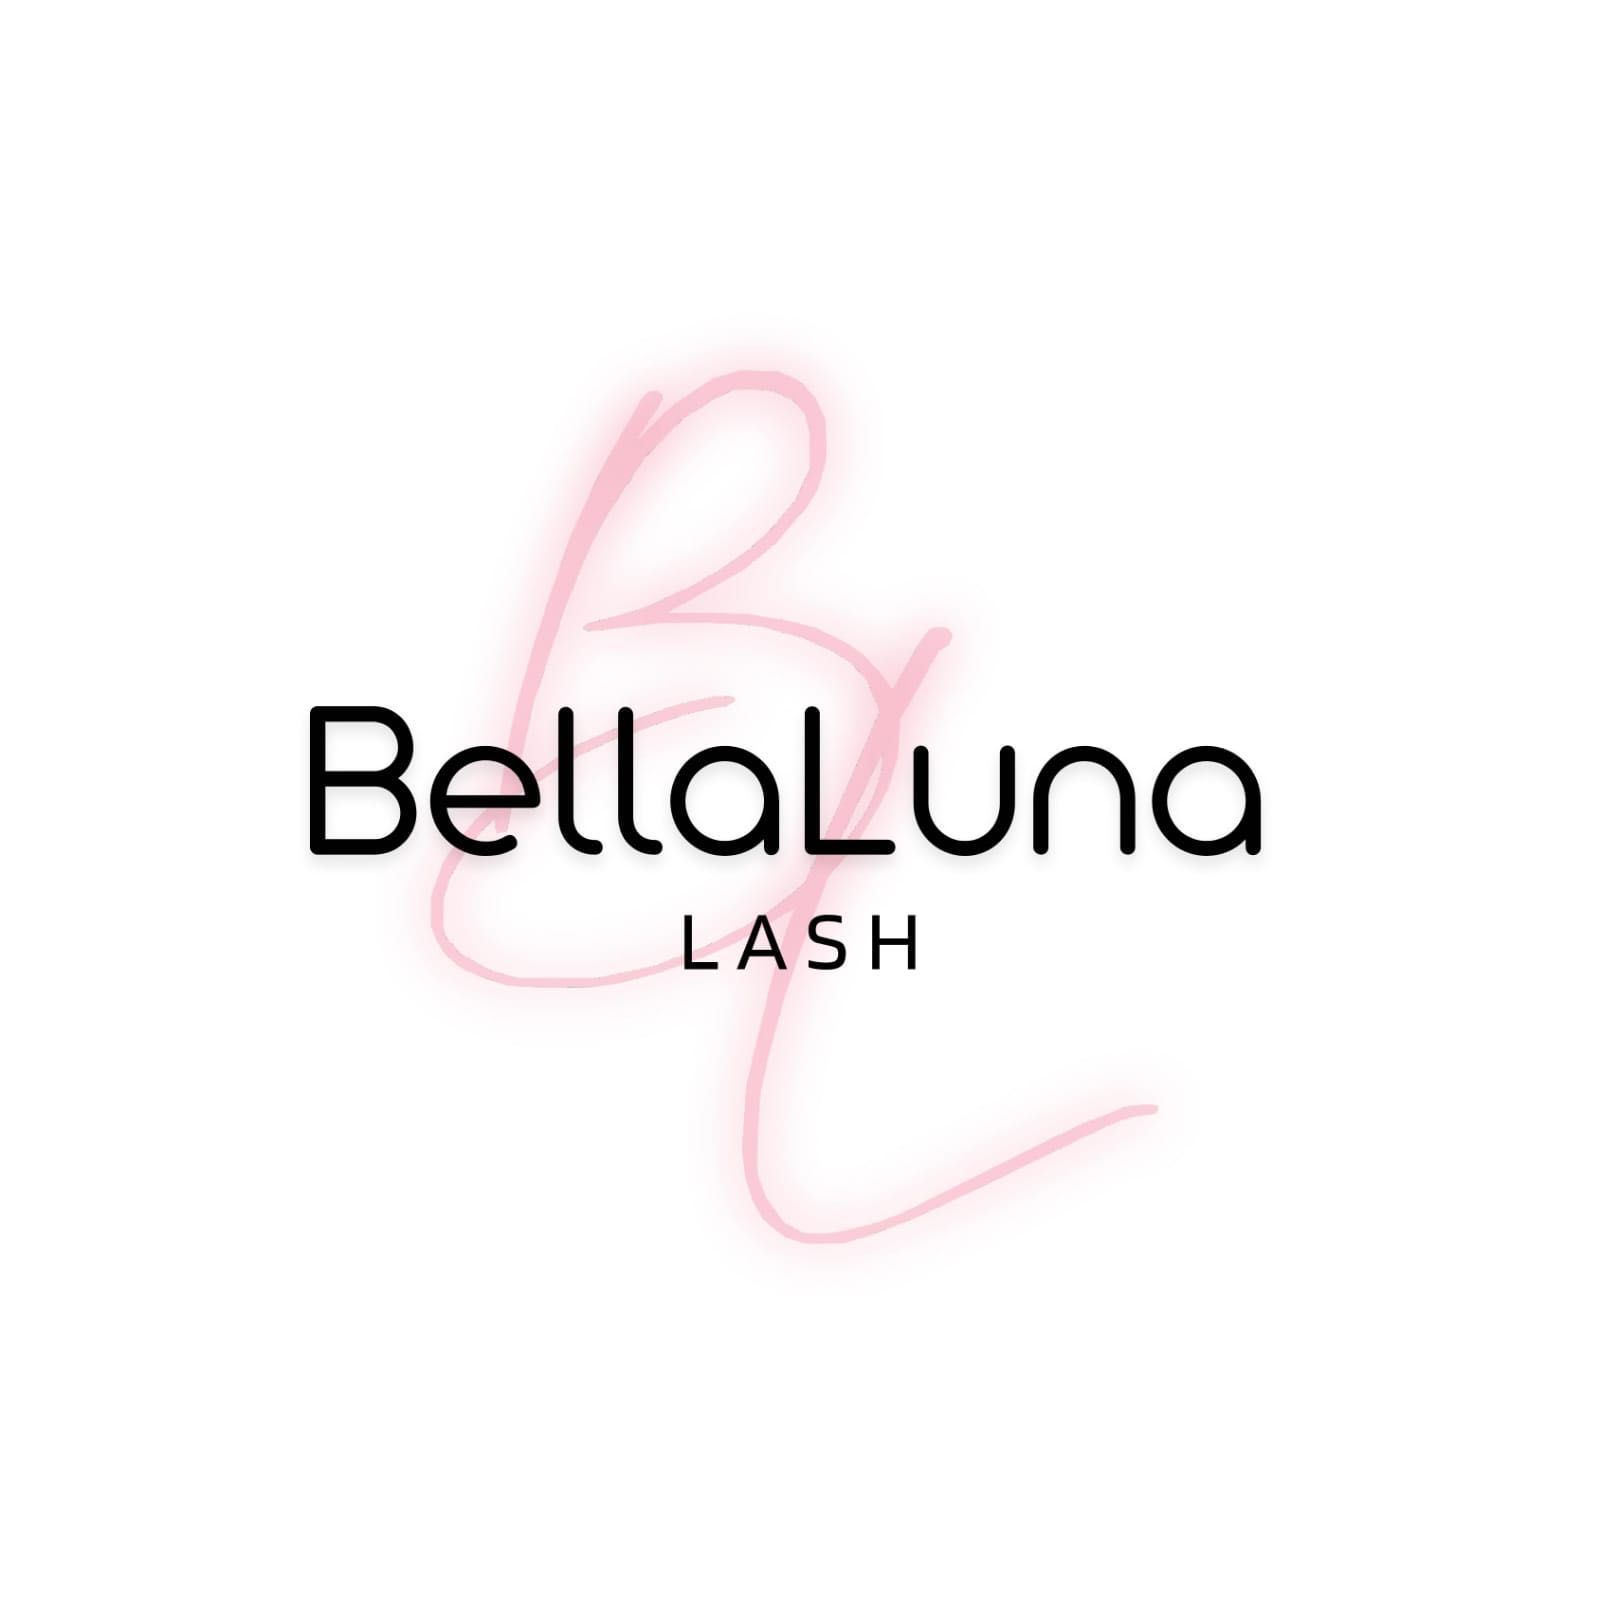 BellaLuna Lash, 19 John Grainsford Street, Picsa Building, 7560, Brackenfell